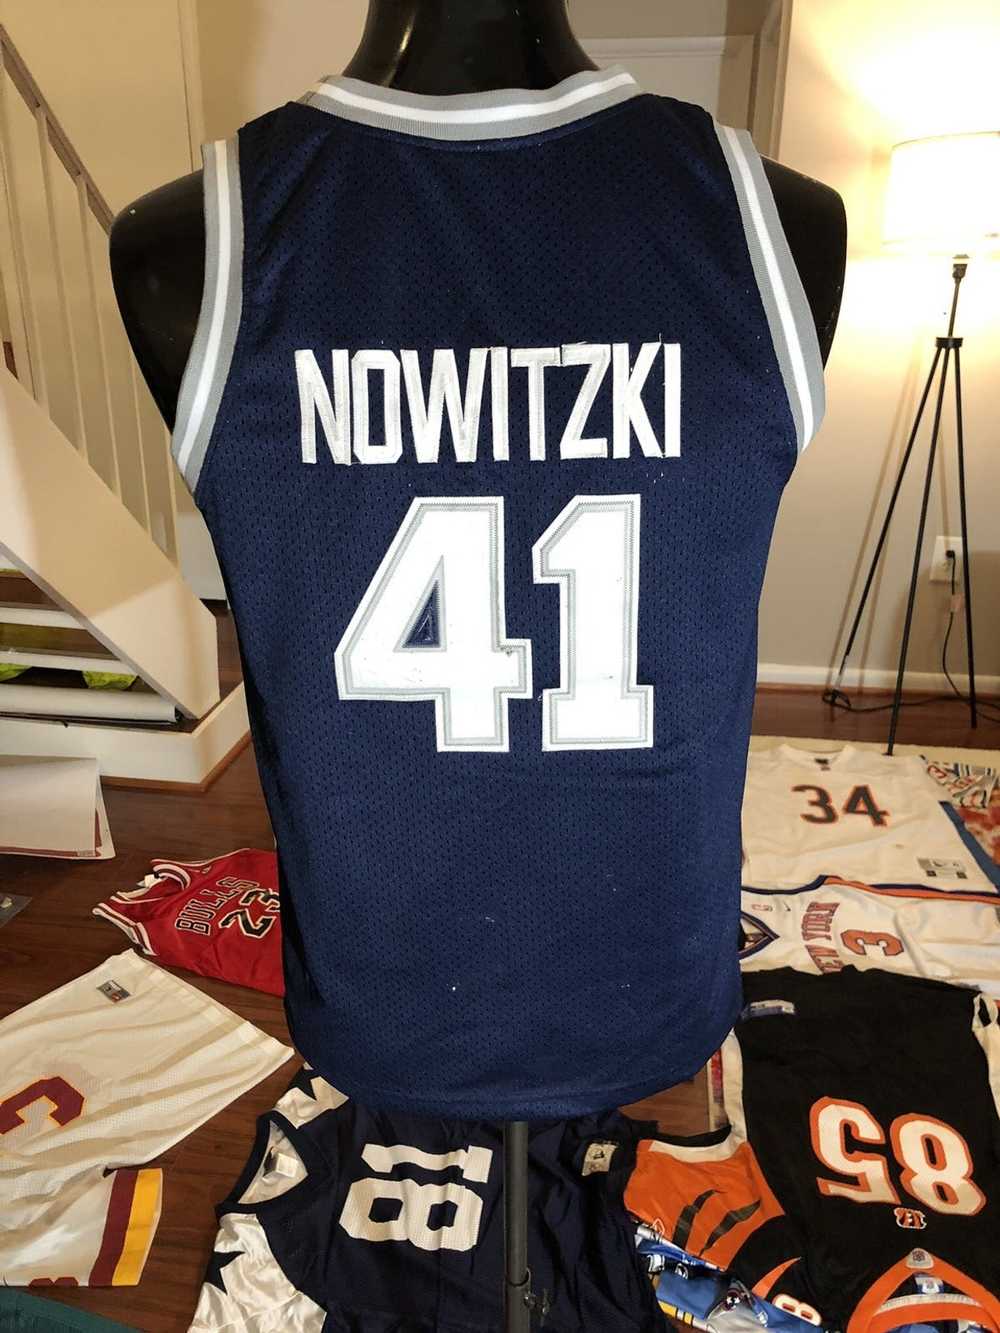 Dirk Nowitzki 41 Roswell Rayguns Black Basketball Jersey